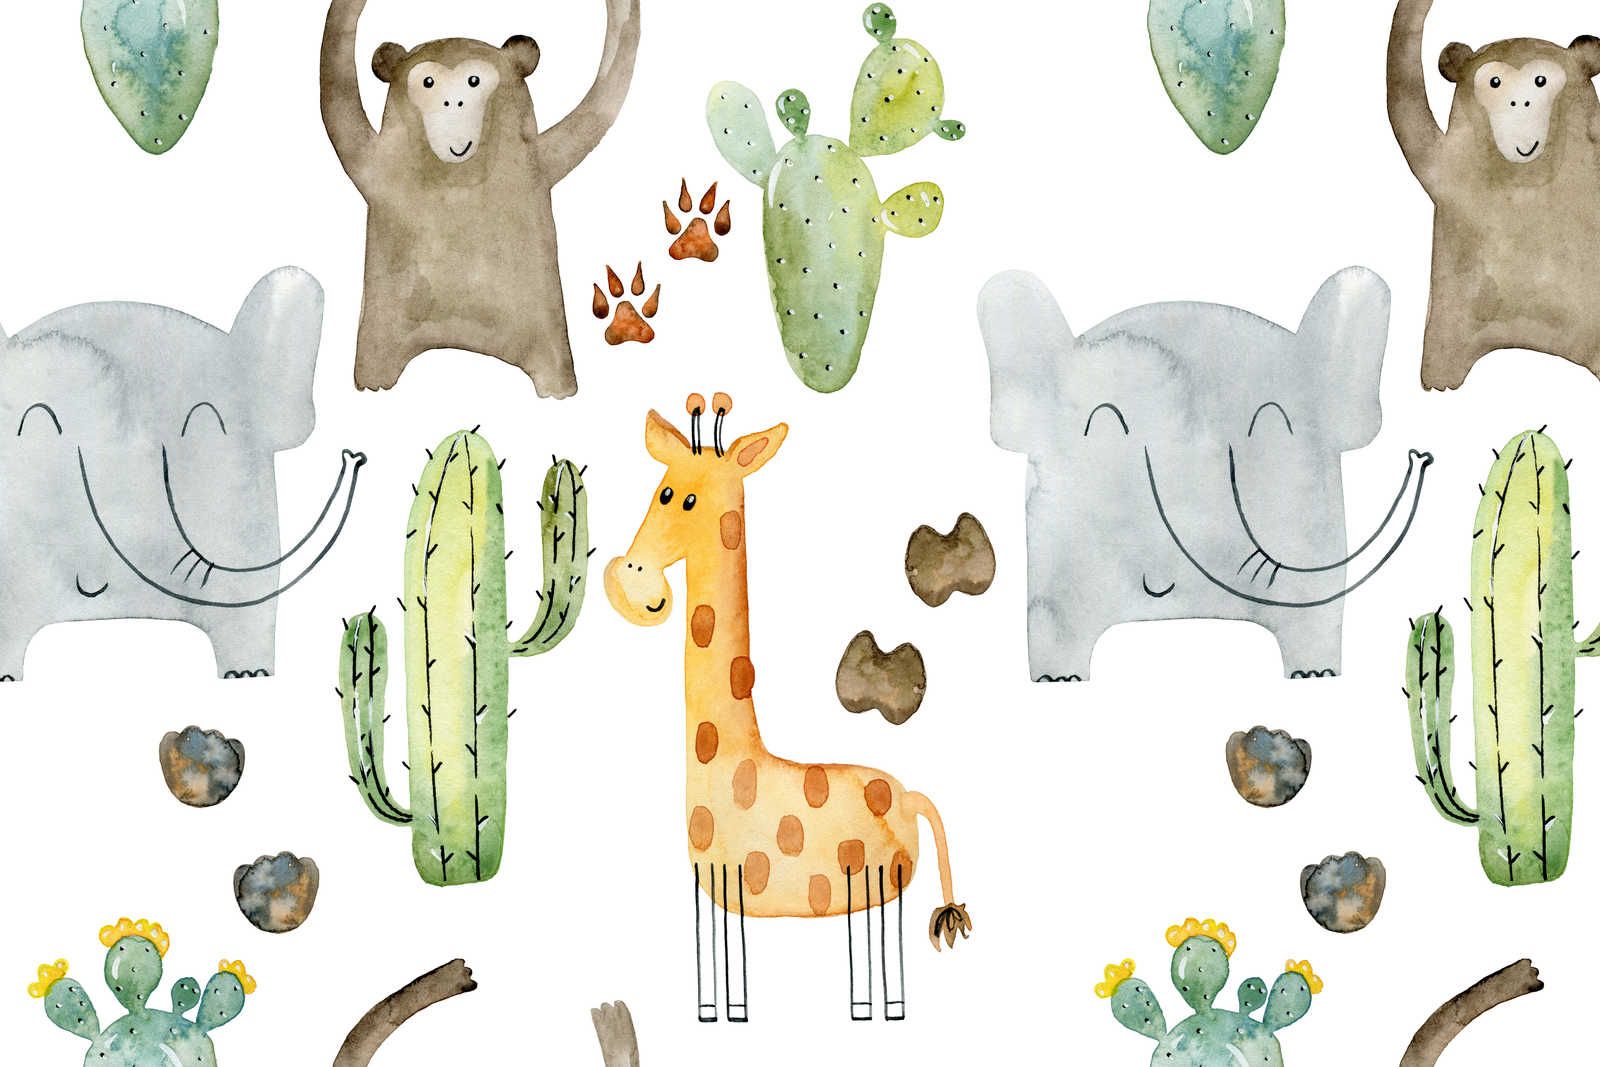             Lienzo con animales y cactus - 90 cm x 60 cm
        